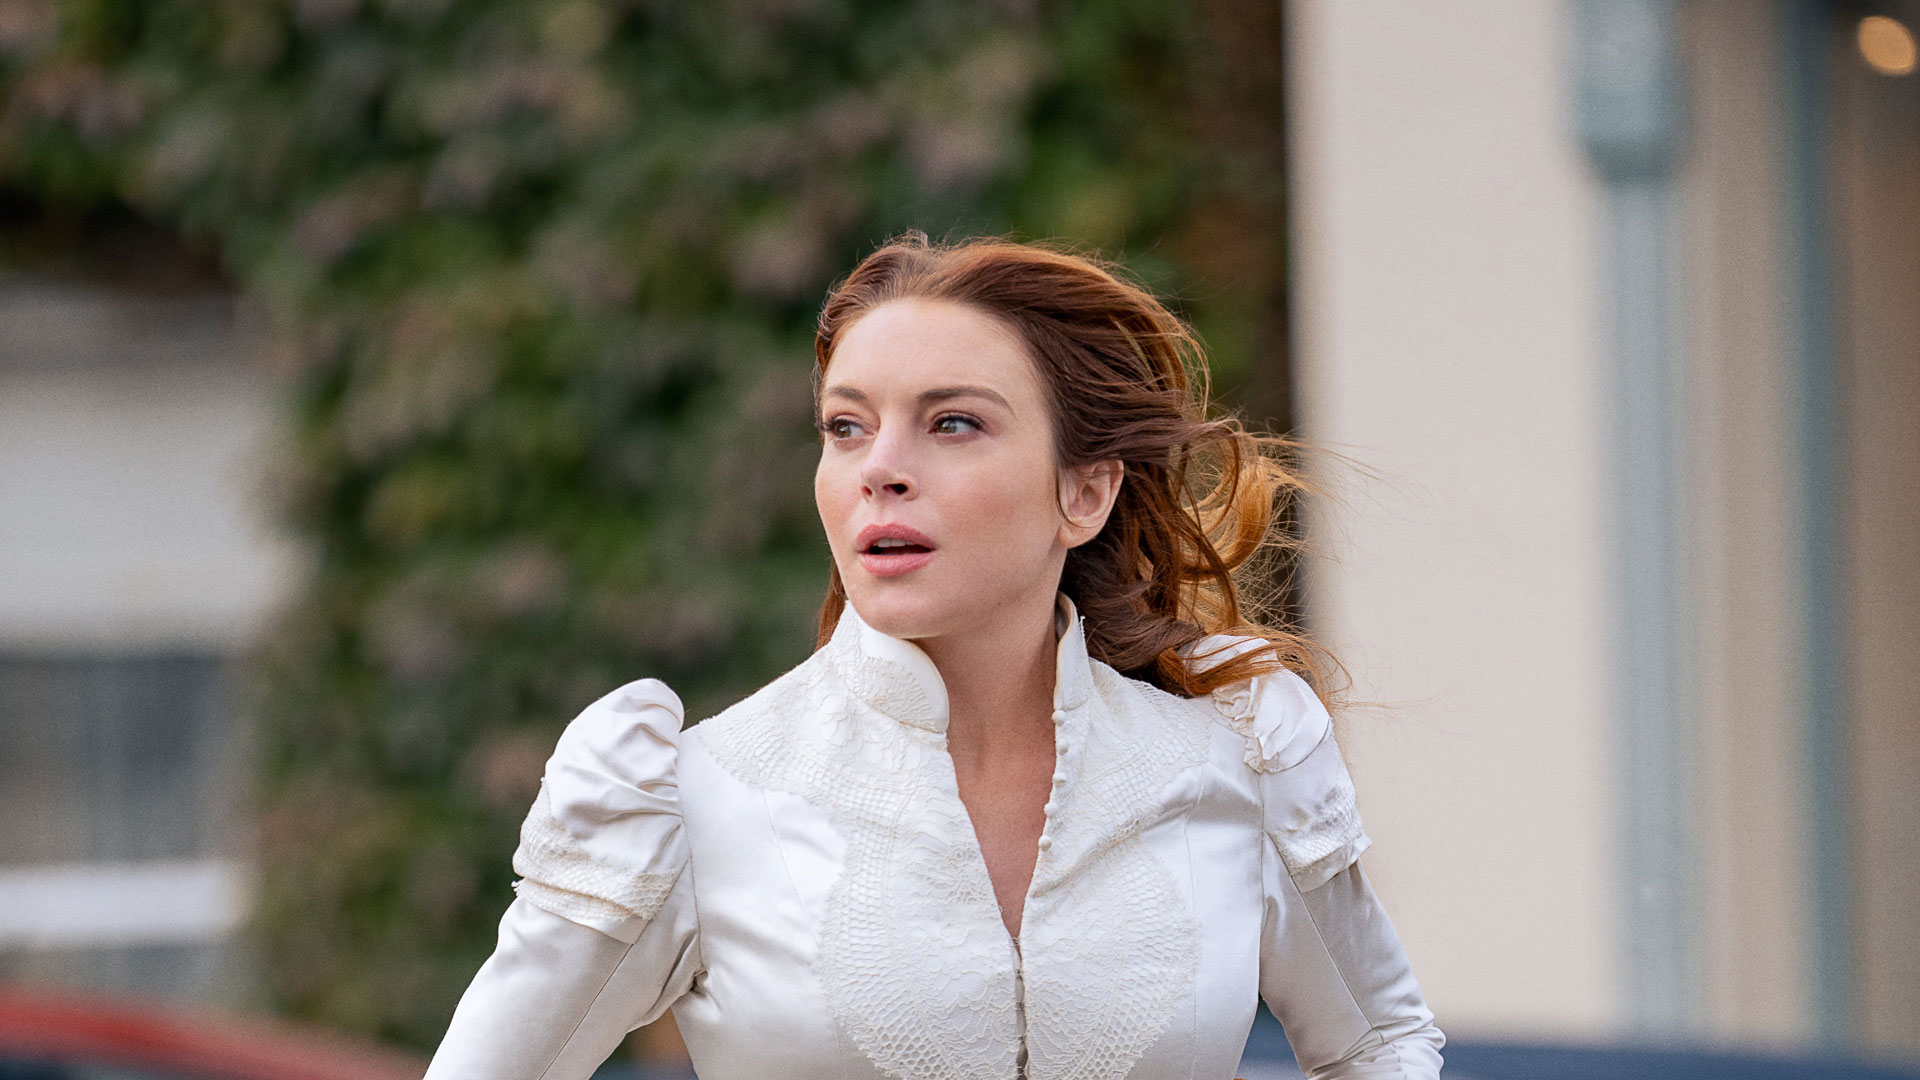 Lindsay Lohan fans rejoice as Netflix releases trailer for star’s new movie